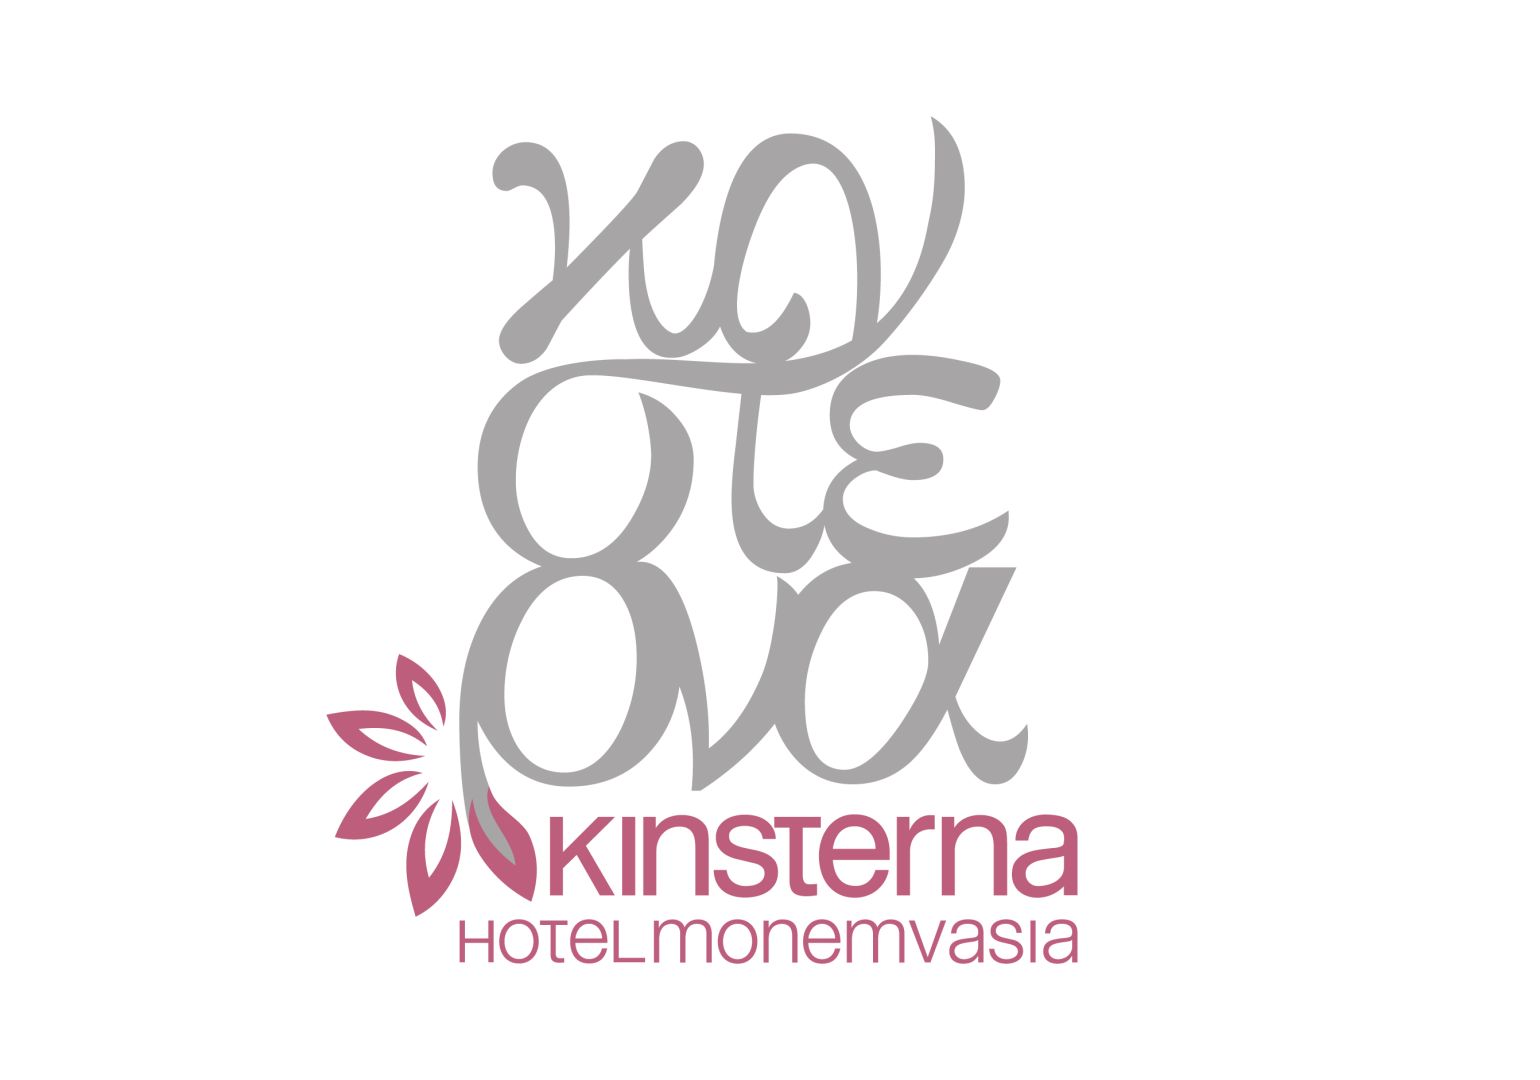 Kinsterna Hotel, Monemvasia, Peloponnese, Greece